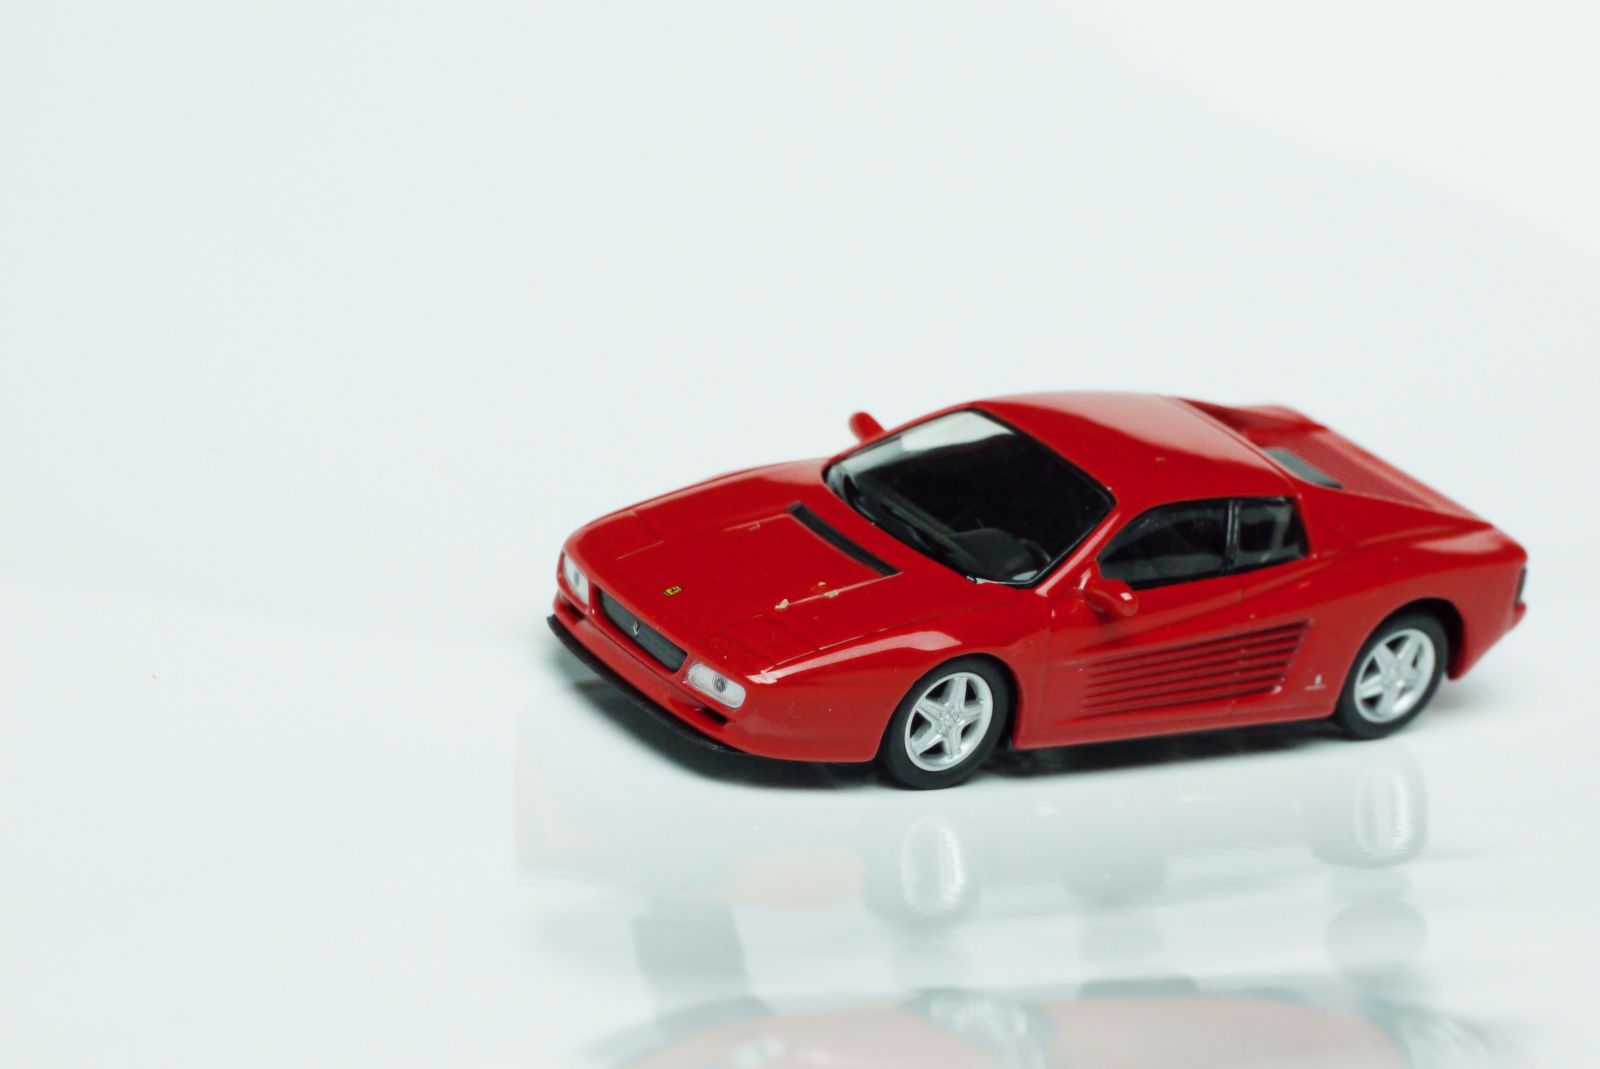 Illustration for article titled Kyosho Ferrari 4 1/64 #27 - Project Prancing Horse #27 - 1991 Ferrari 512 TR